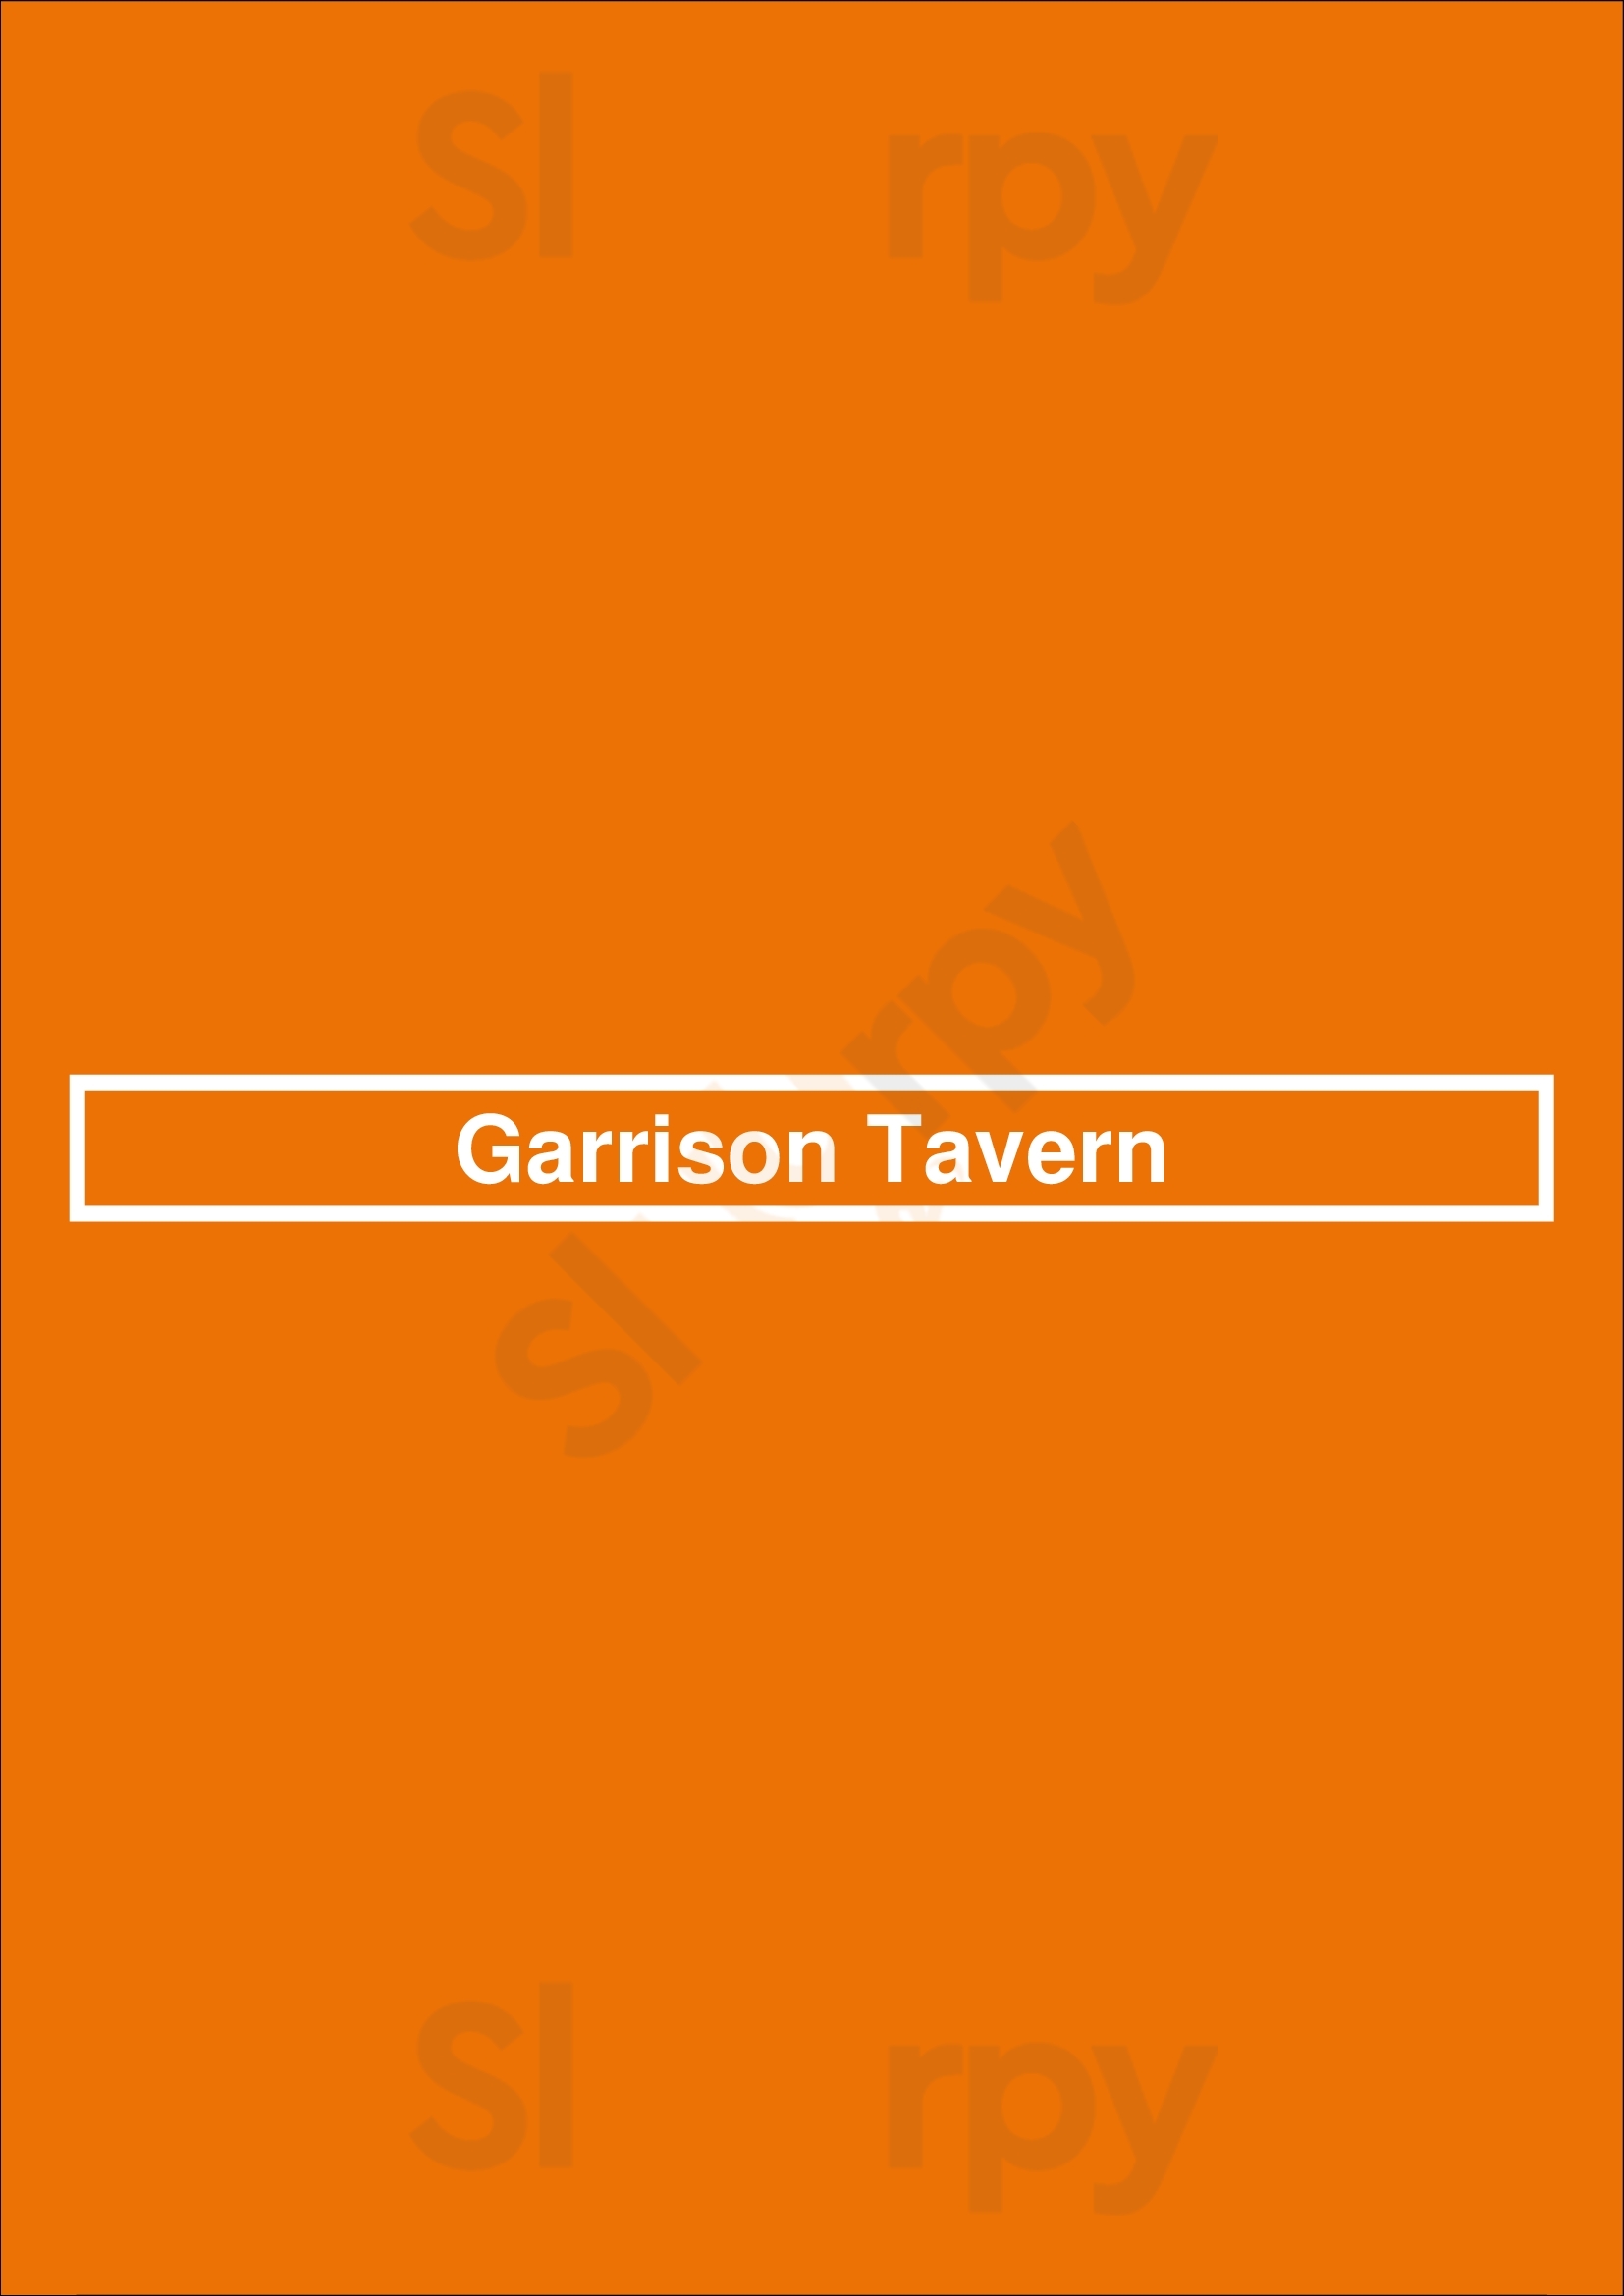 Garrison Tavern Tampa Menu - 1